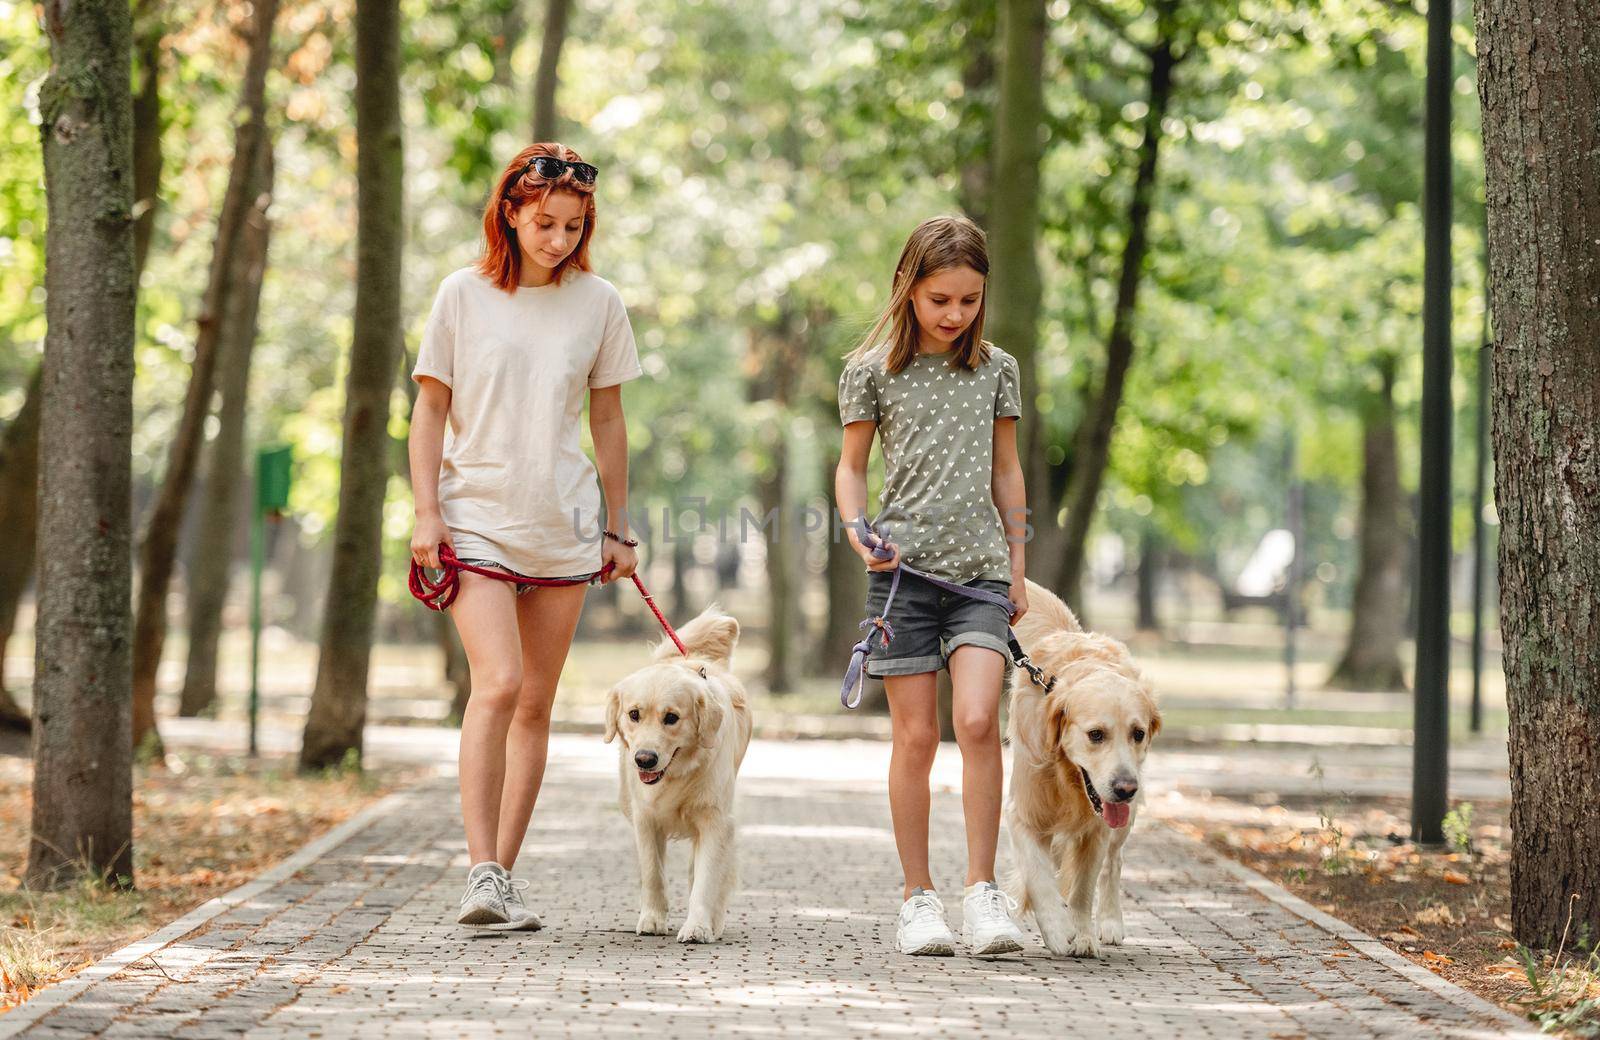 Girls with golden retriever dog by tan4ikk1